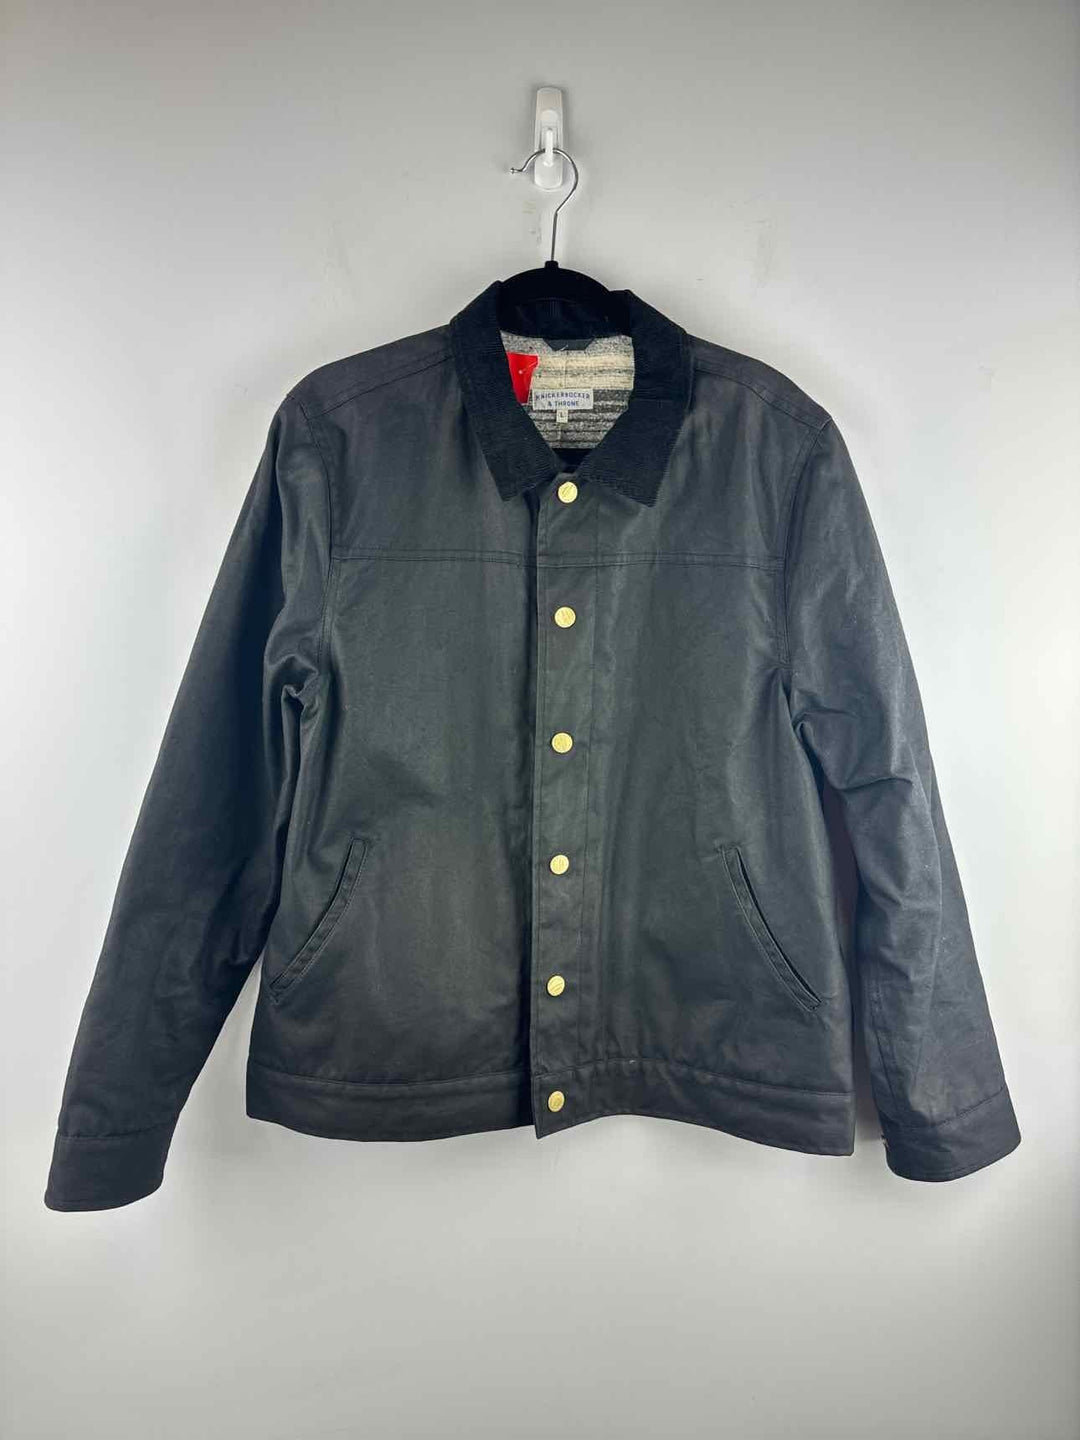 Simply Posh Consign Jacket Black / L Solid Men's Waxed Cotton Jackets & Coats Mens Size L Black Jacket